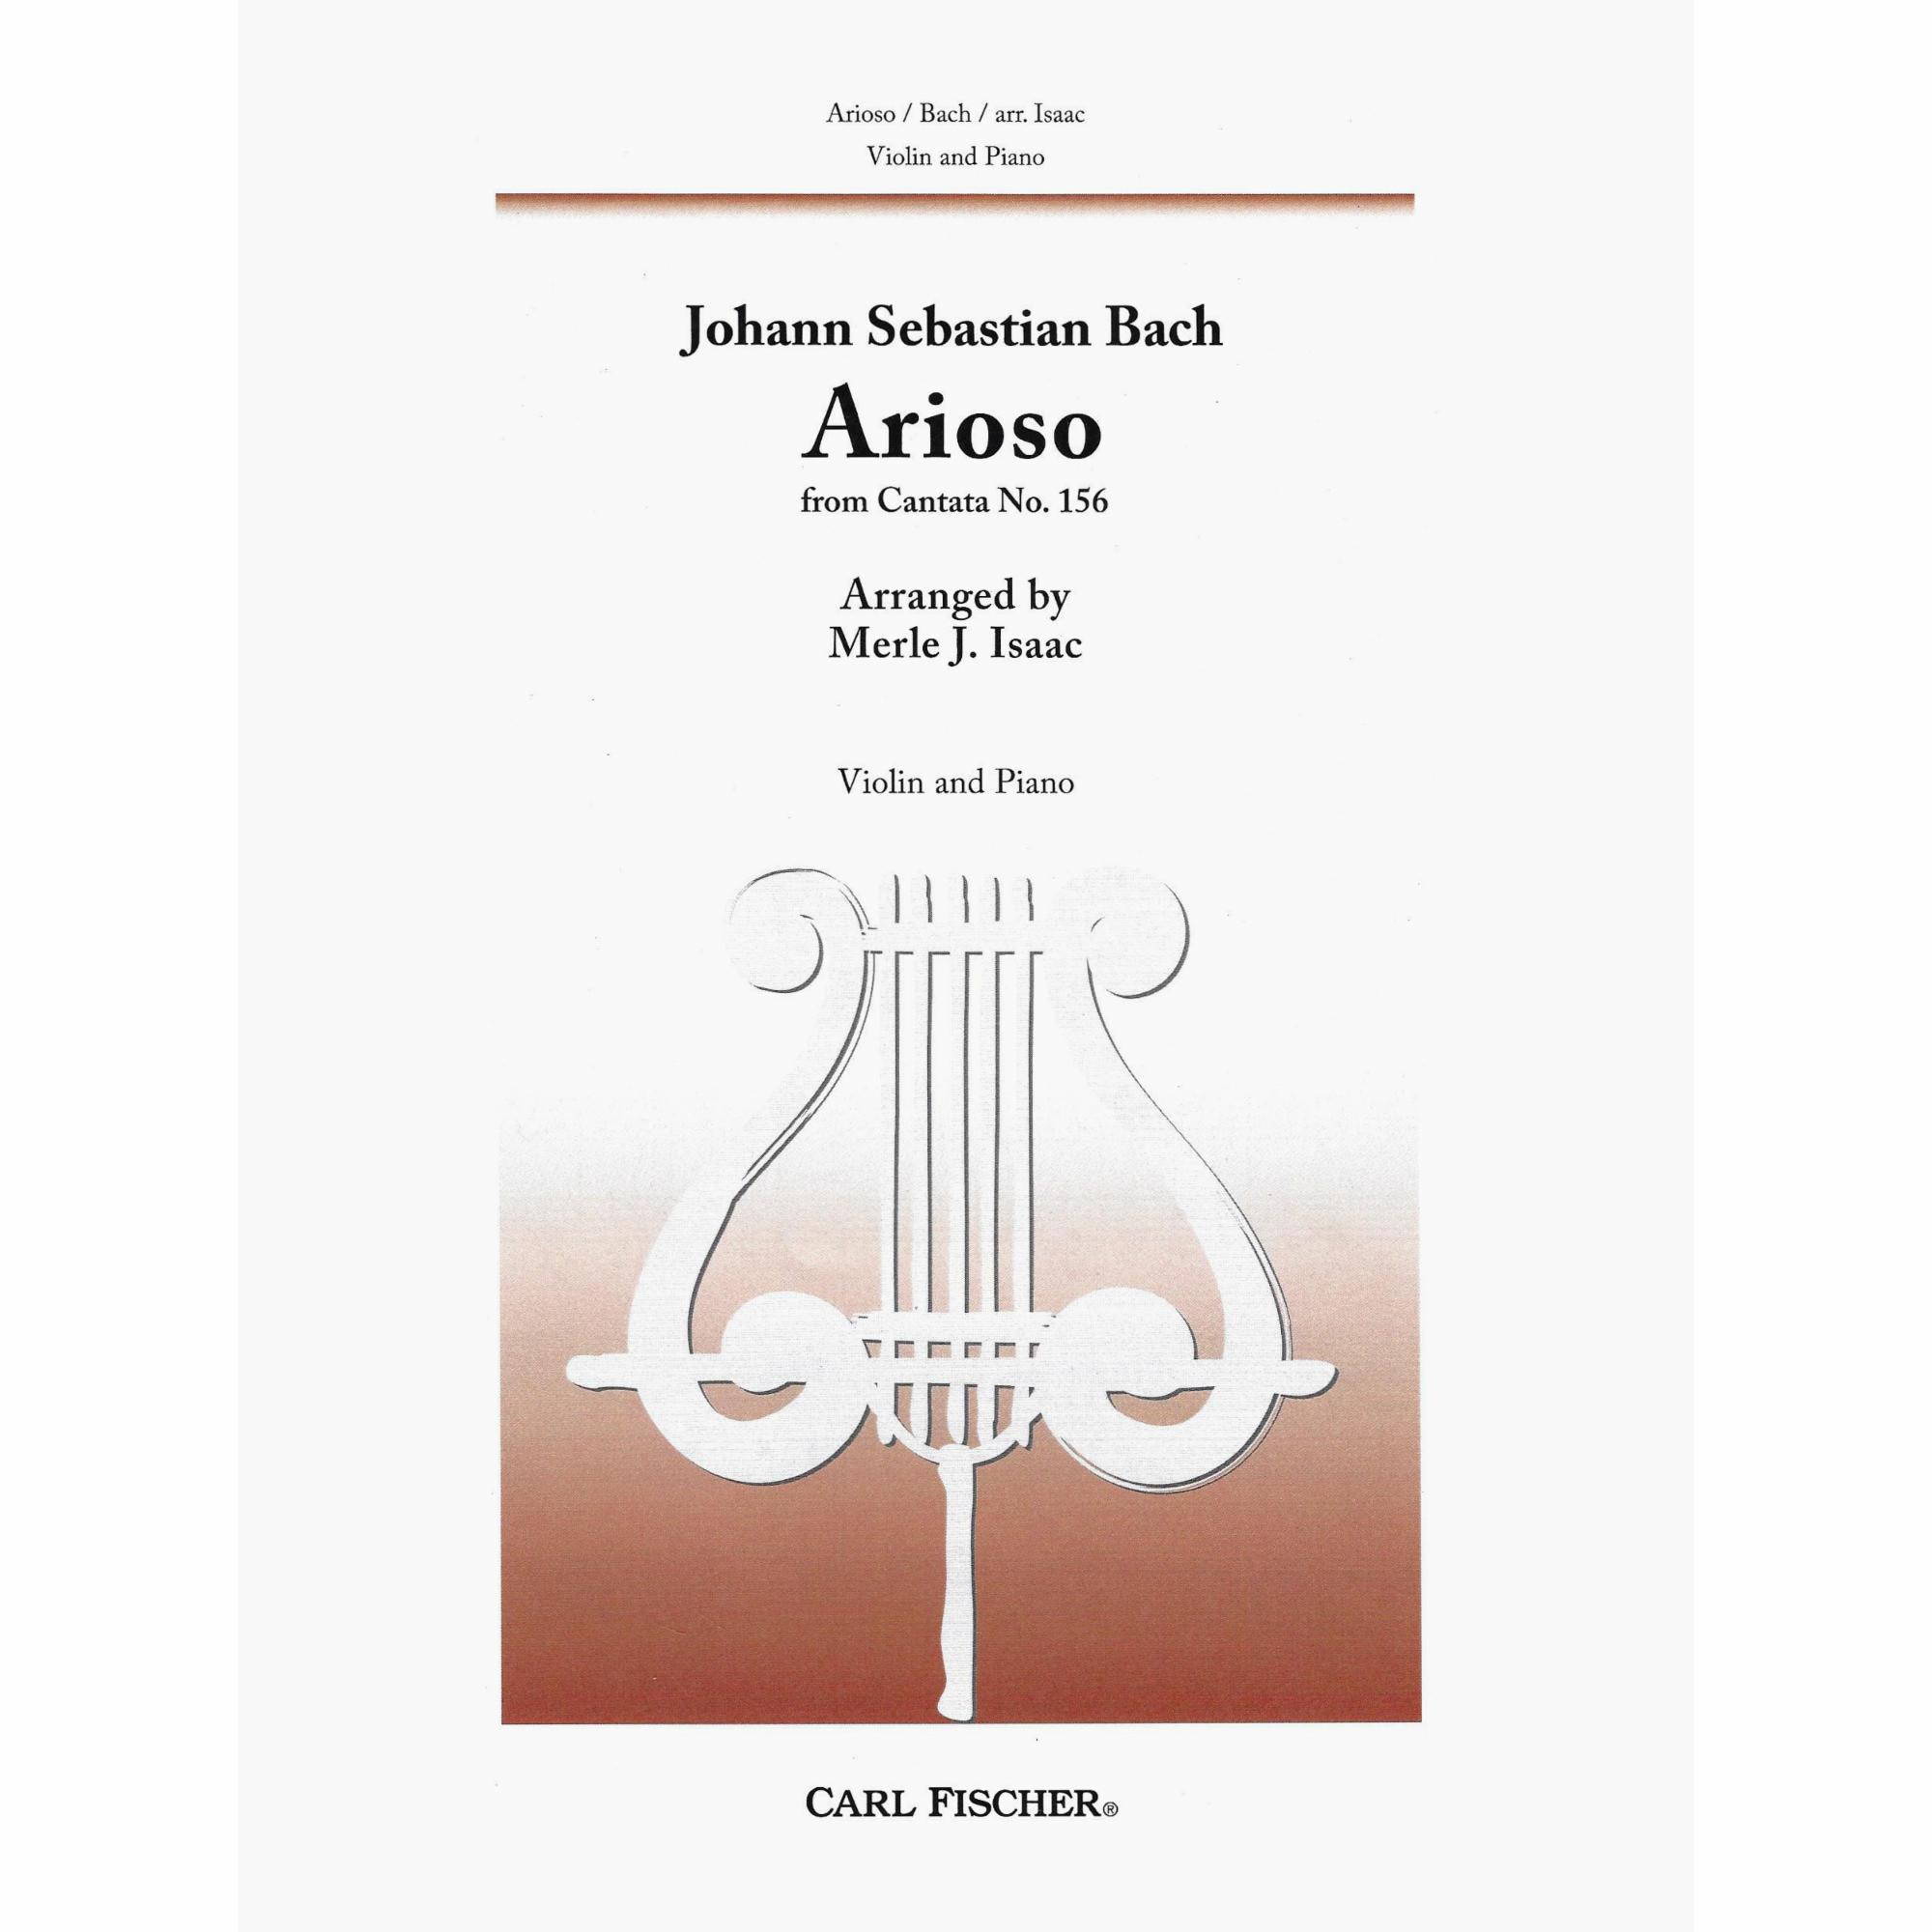 Bach -- Arioso, from Cantata No. 156 for Violin and Piano